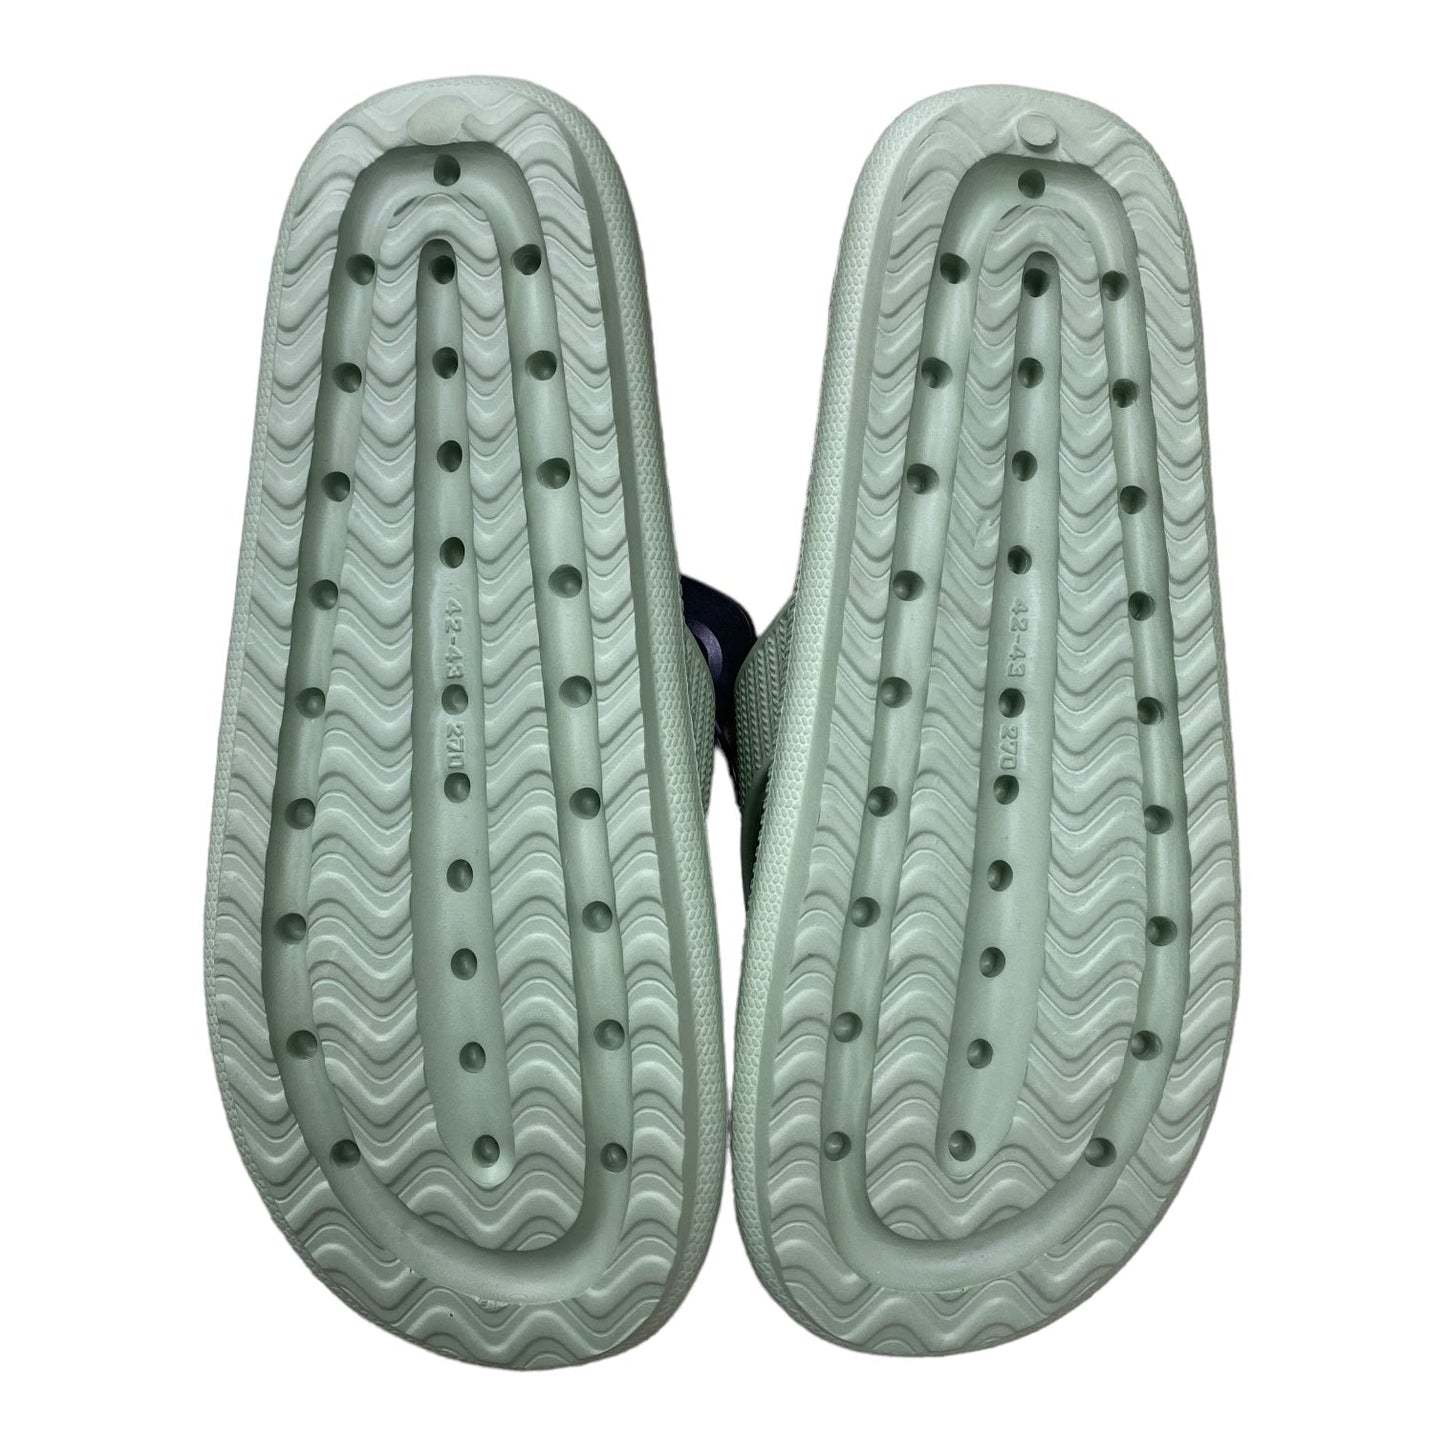 Green Sandals Flats Clothes Mentor, Size 11